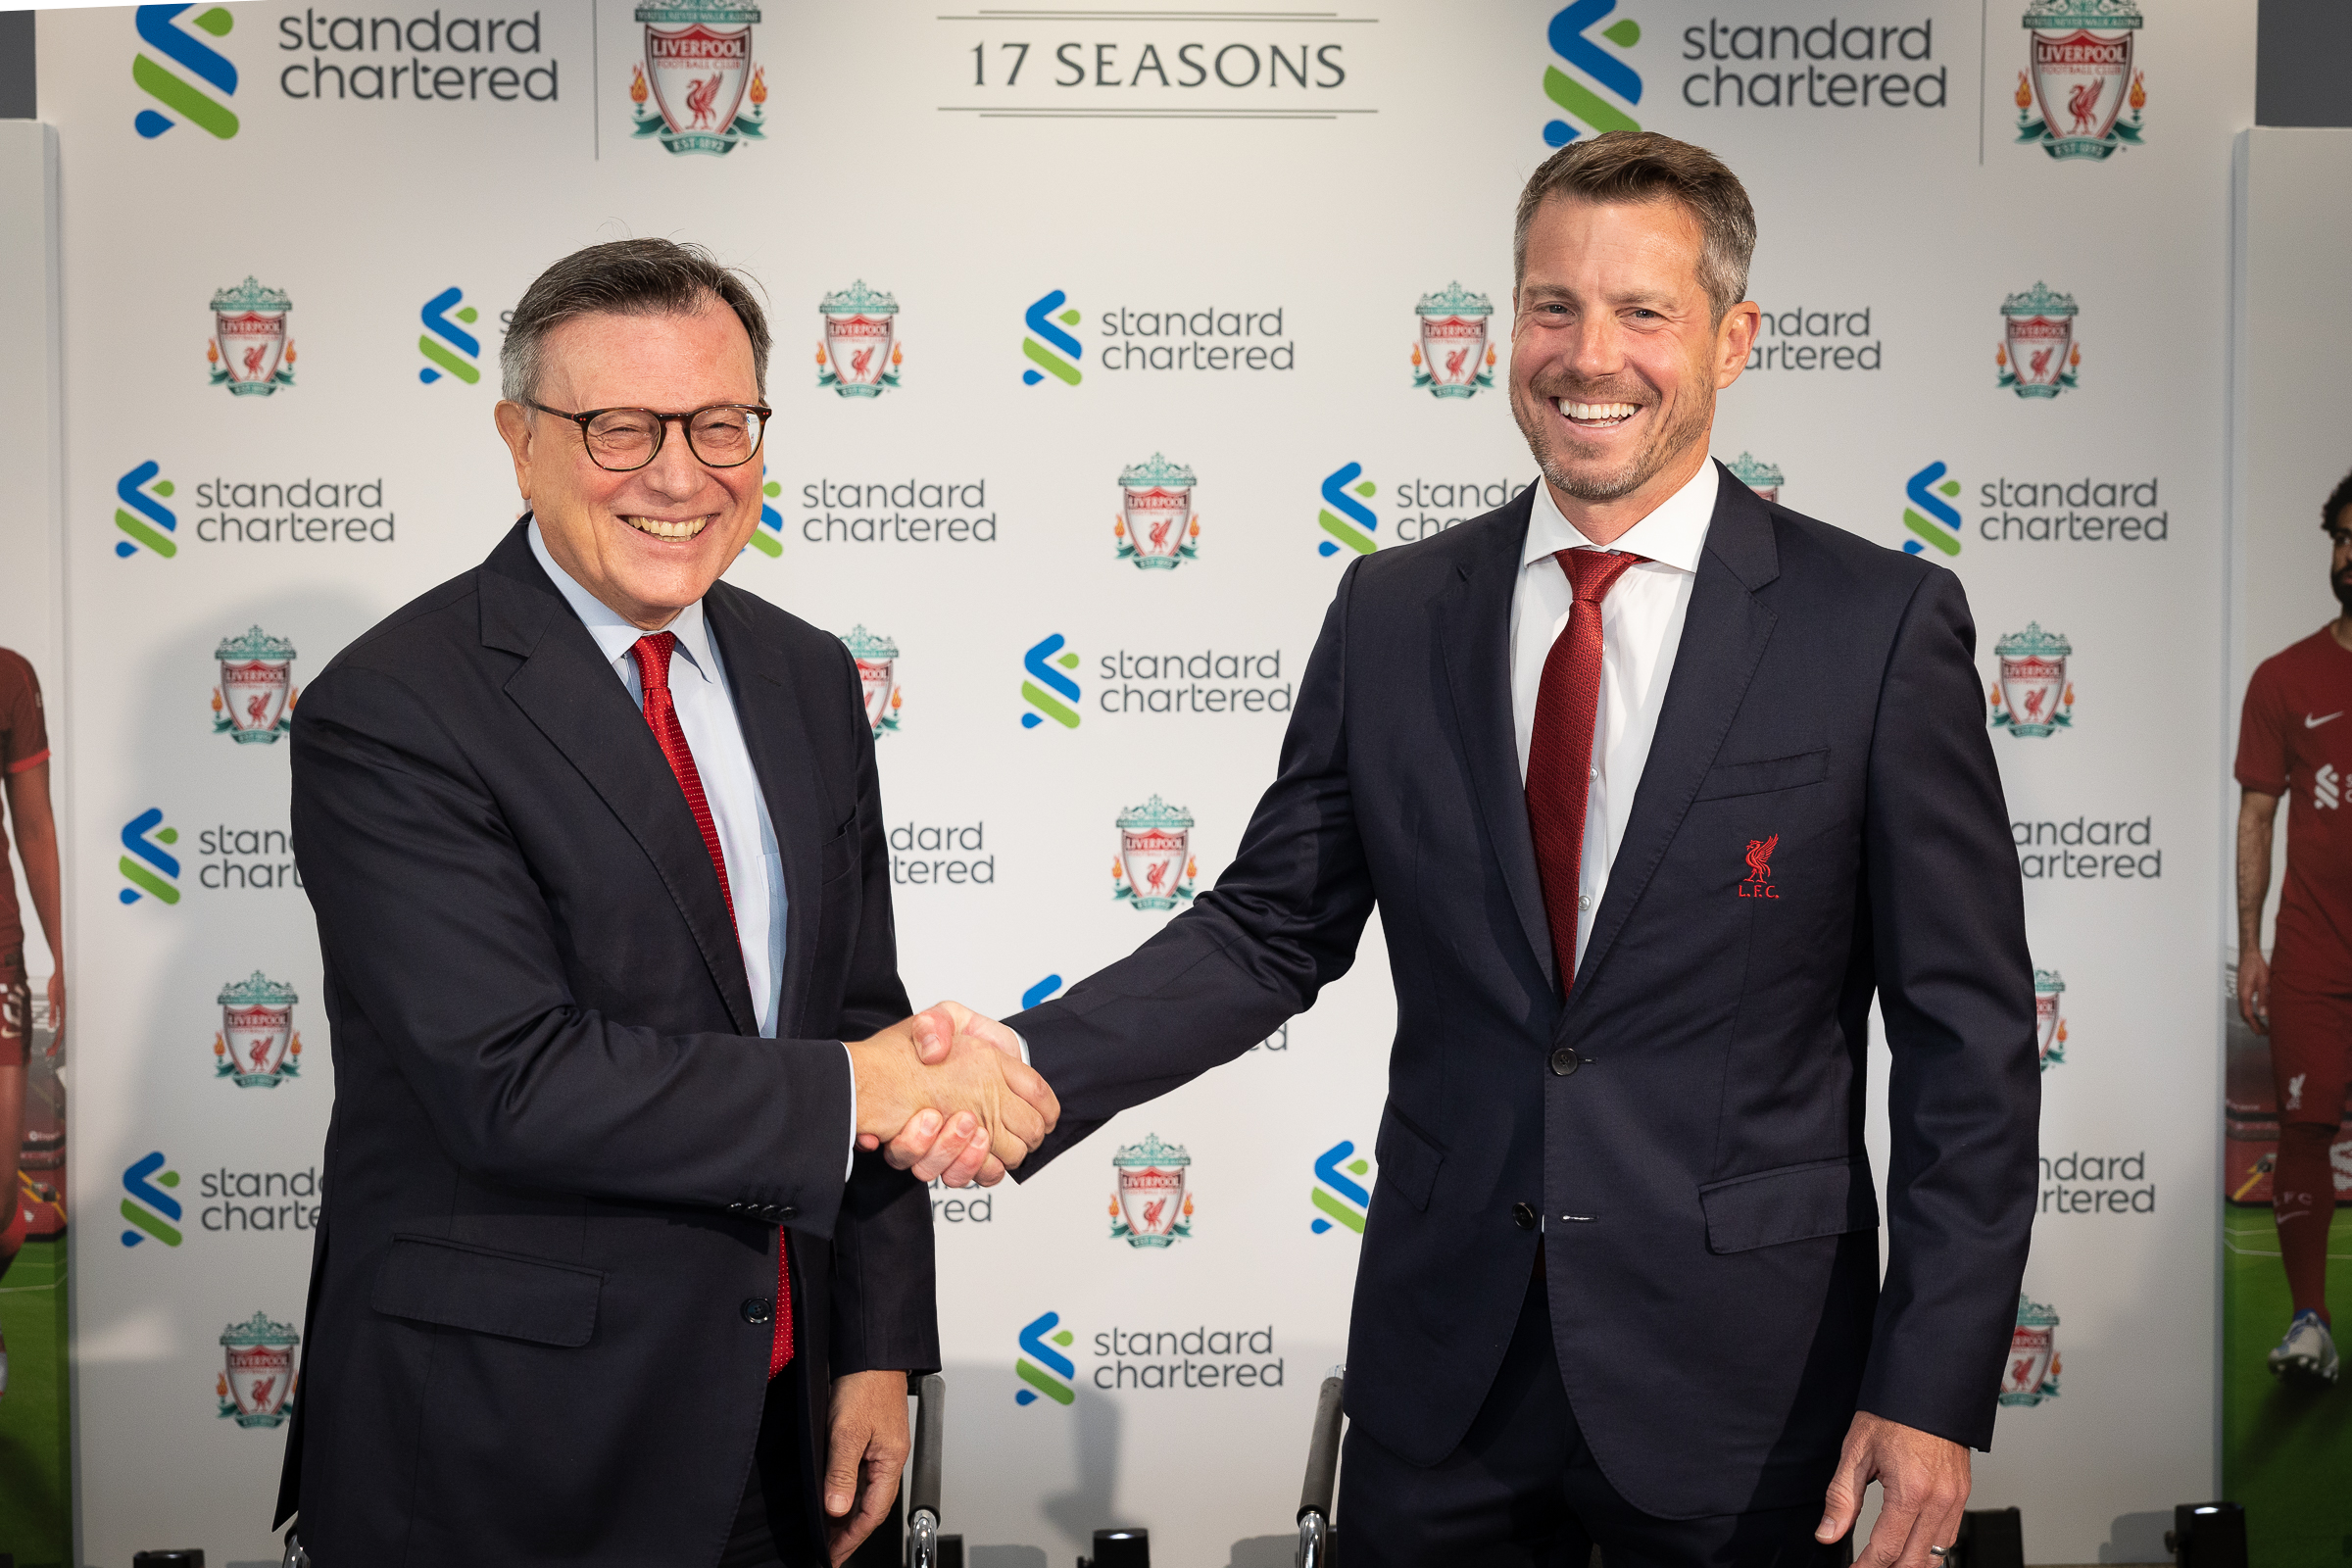 Liverpool FC Sponsored Partnership | Standard Chartered